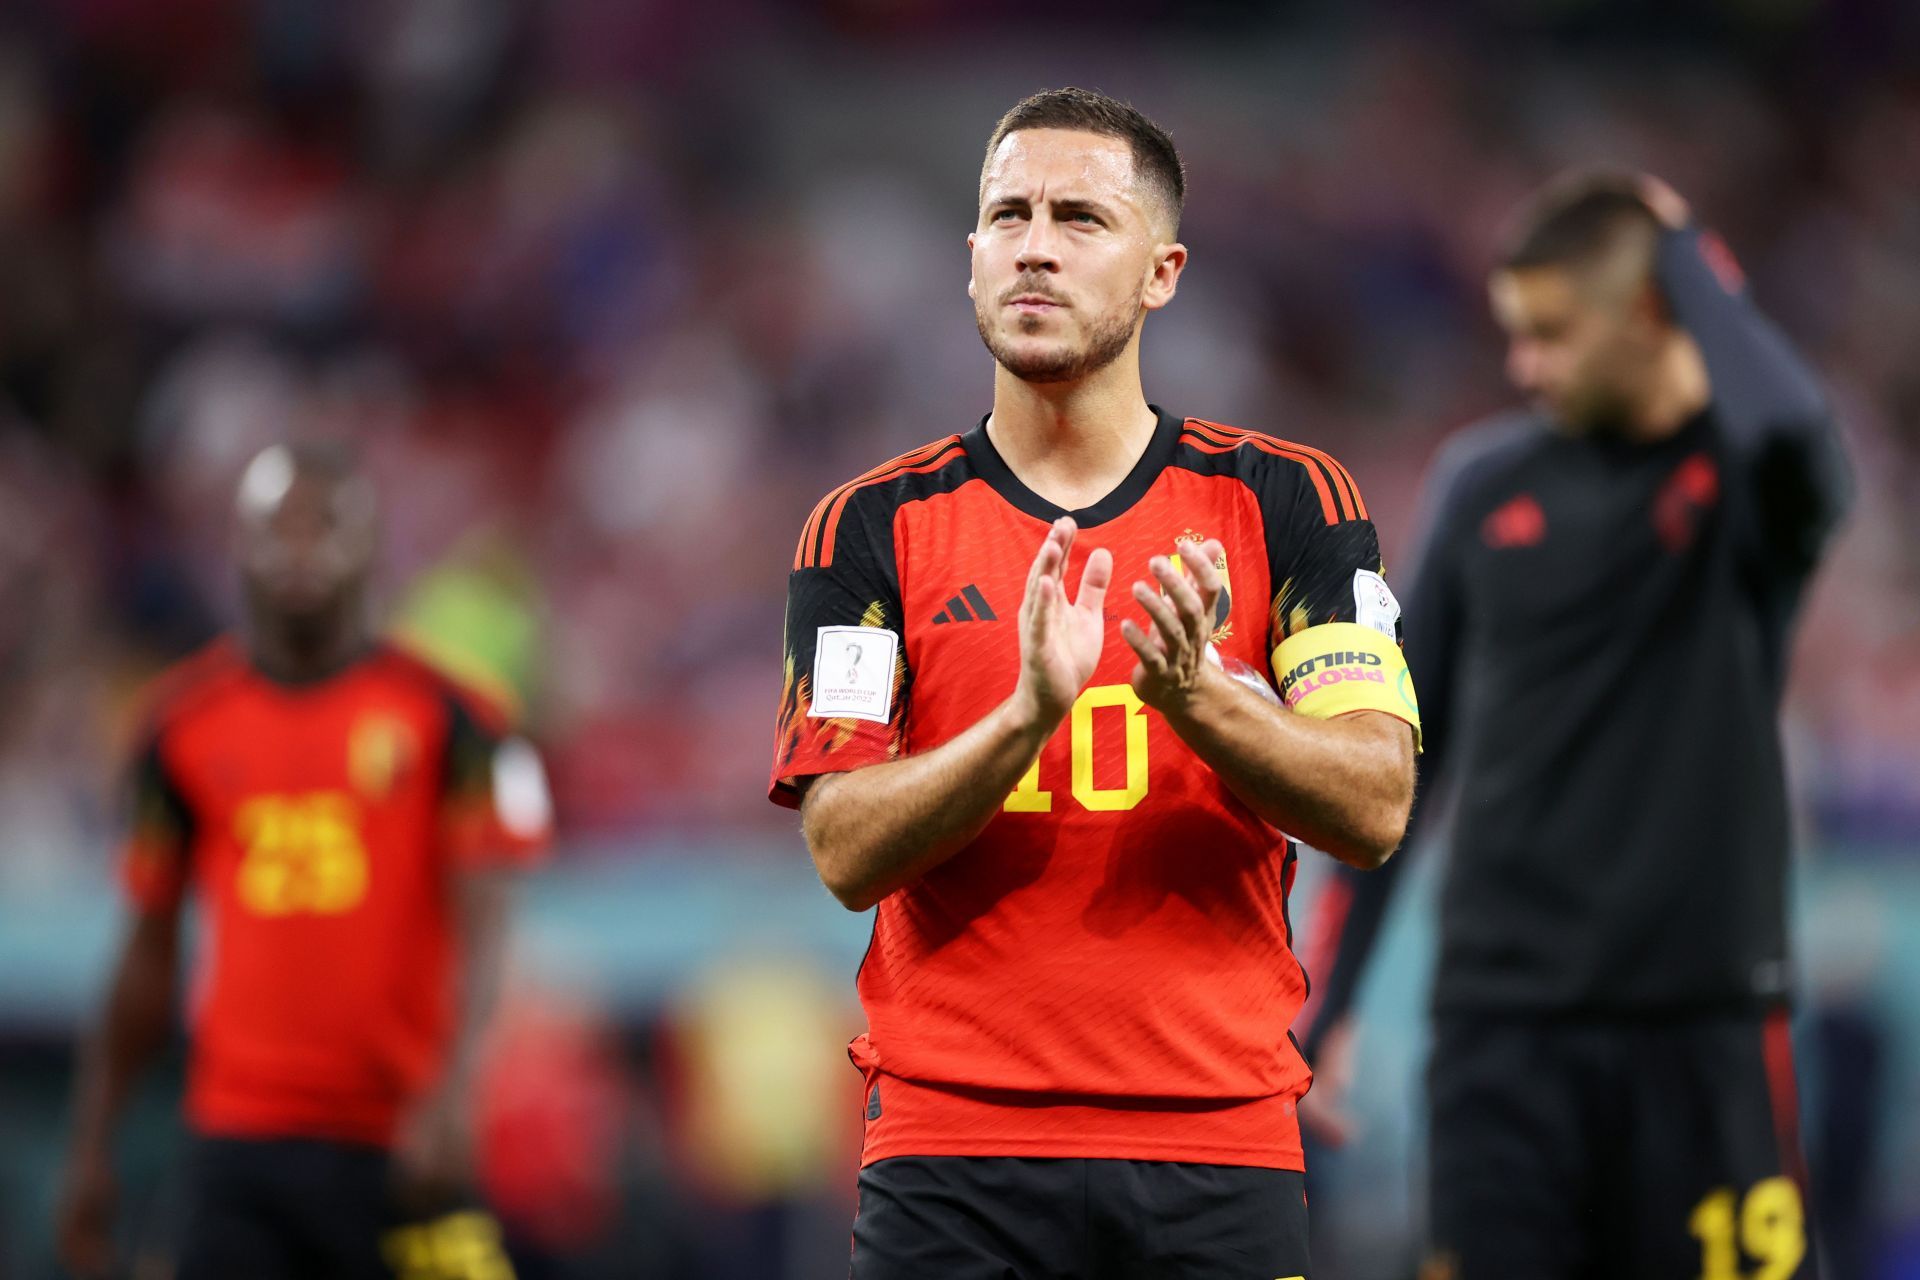 Hazard departed Chelsea in July 2019